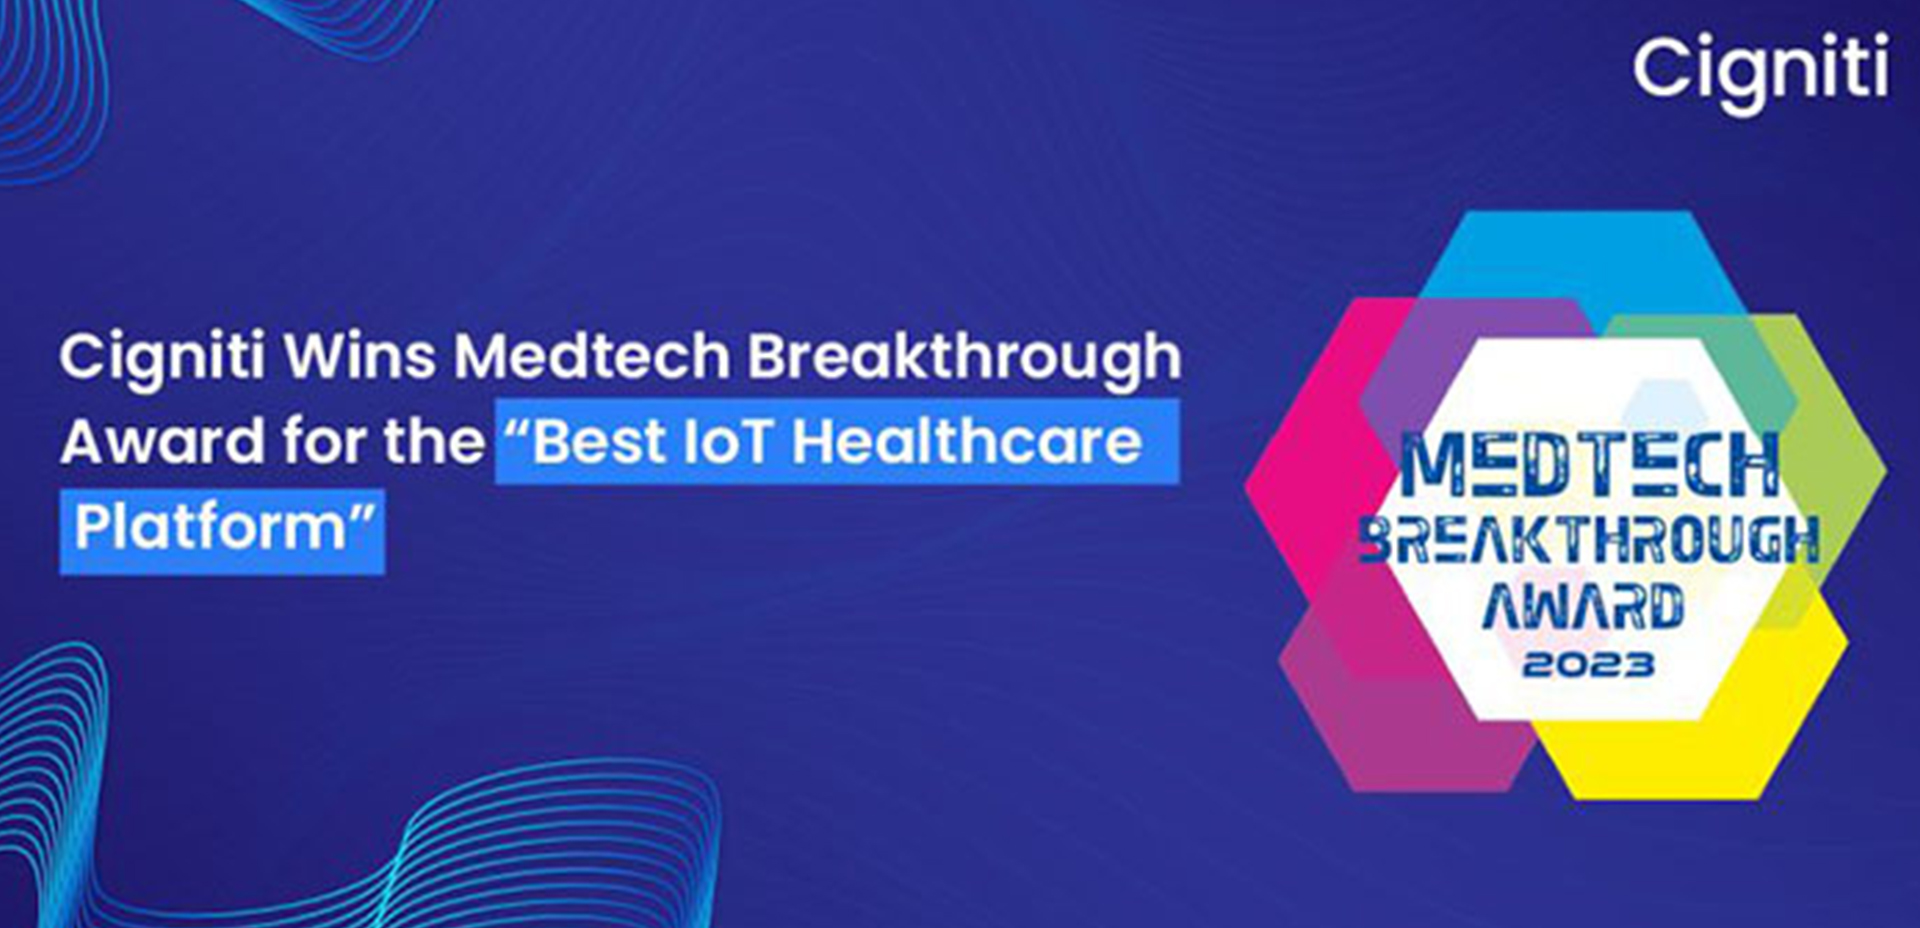 Cigniti’s 𝐈𝐨𝐌𝐓 𝐀𝐮𝐭𝐨𝐦𝐚𝐭𝐢𝐨𝐧 F𝐫𝐚𝐦𝐞𝐰𝐨𝐫𝐤 Receives "Best IoT Healthcare Platform" Award